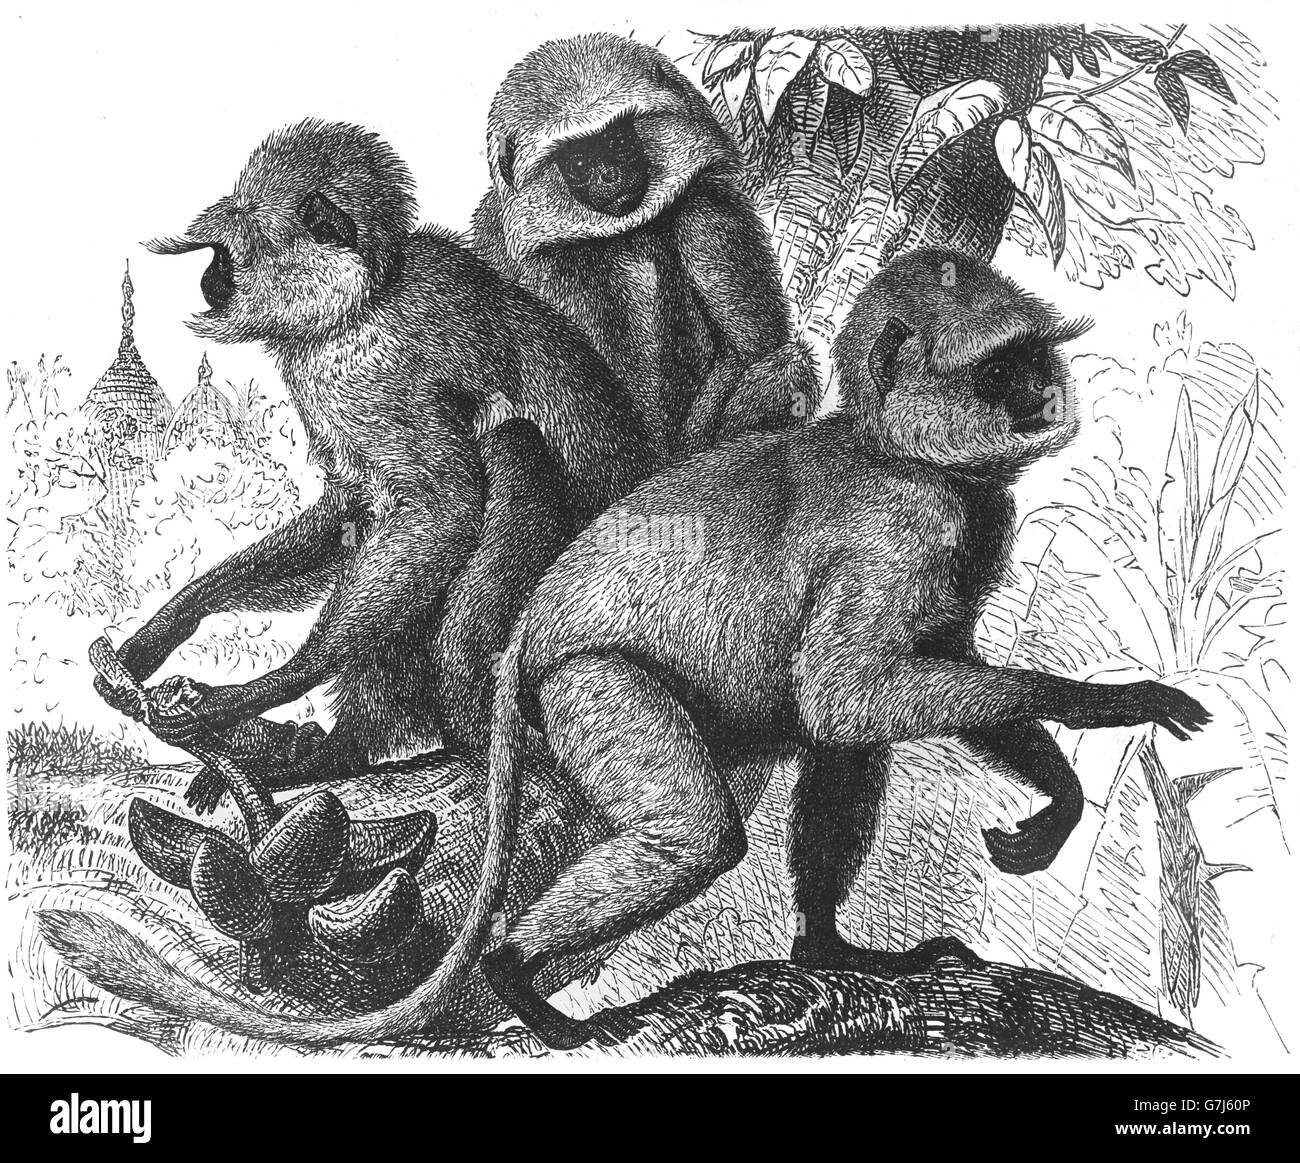 Northern plains gray langur, Semnopithecus entellus, Old World monkey, Cercopithecidae, illustration from book dated 1904 Stock Photo